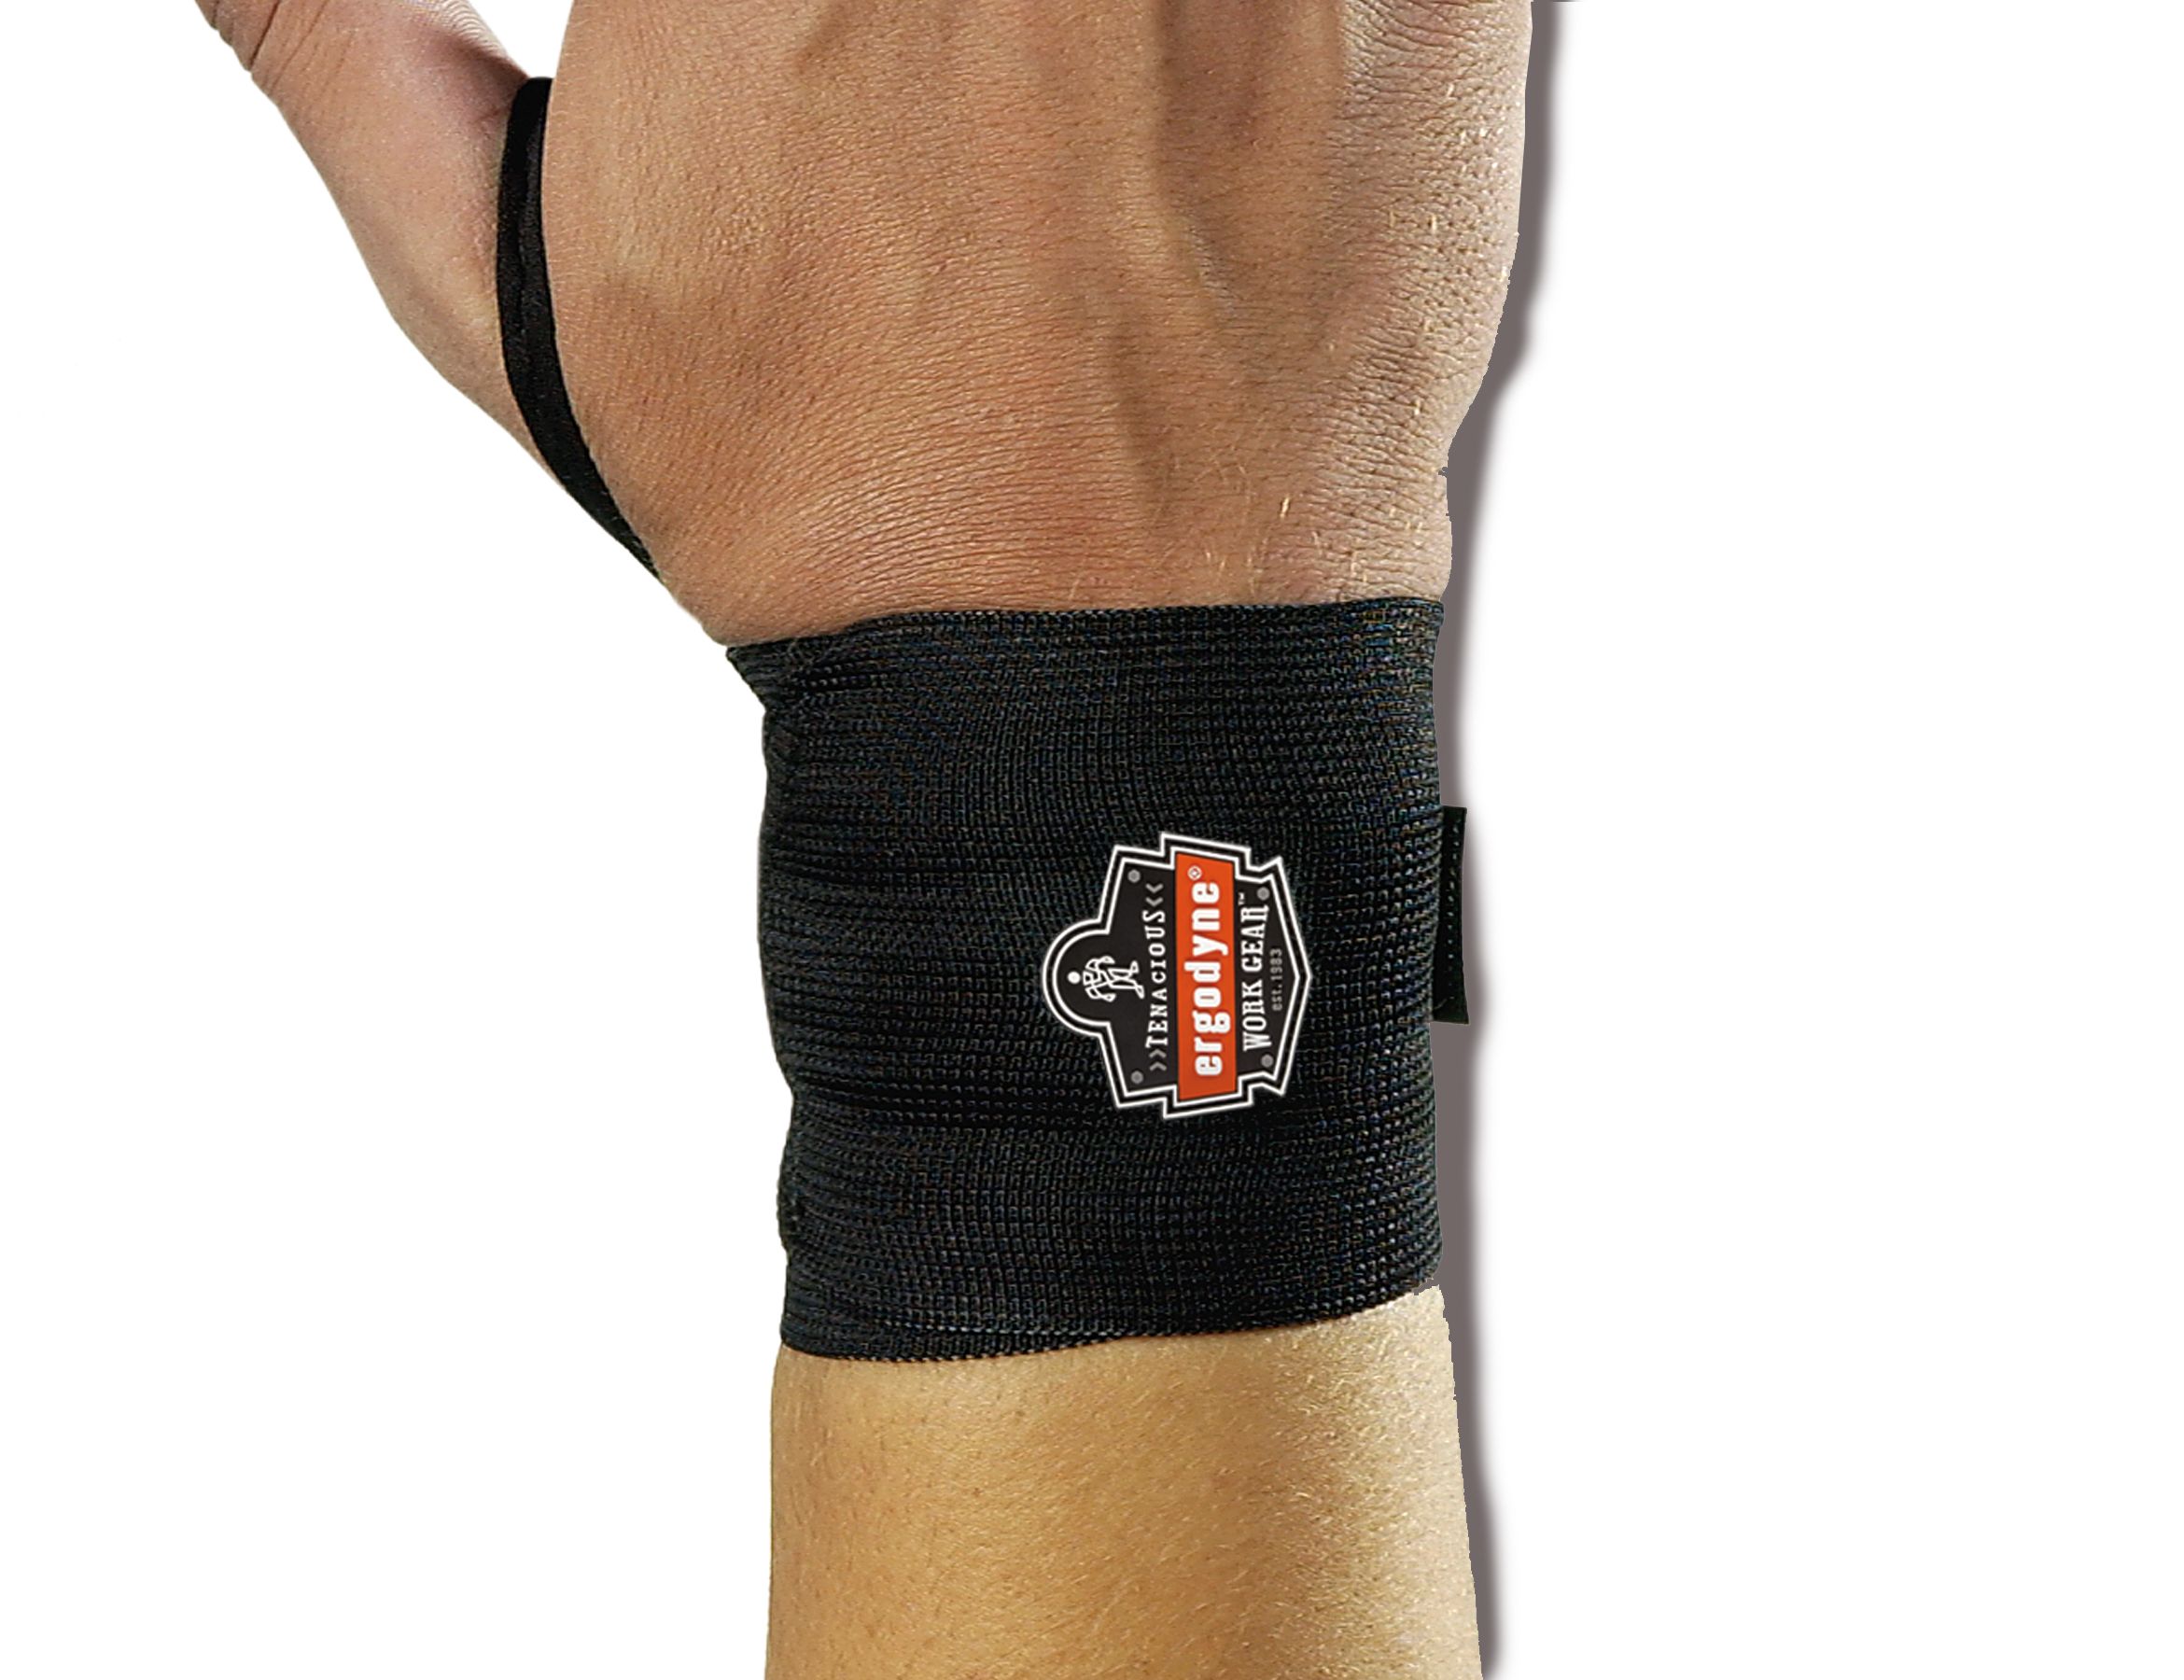 Ergodyne Proflex 4000 Wrist Support Wrist Brace Small Right Hand Black